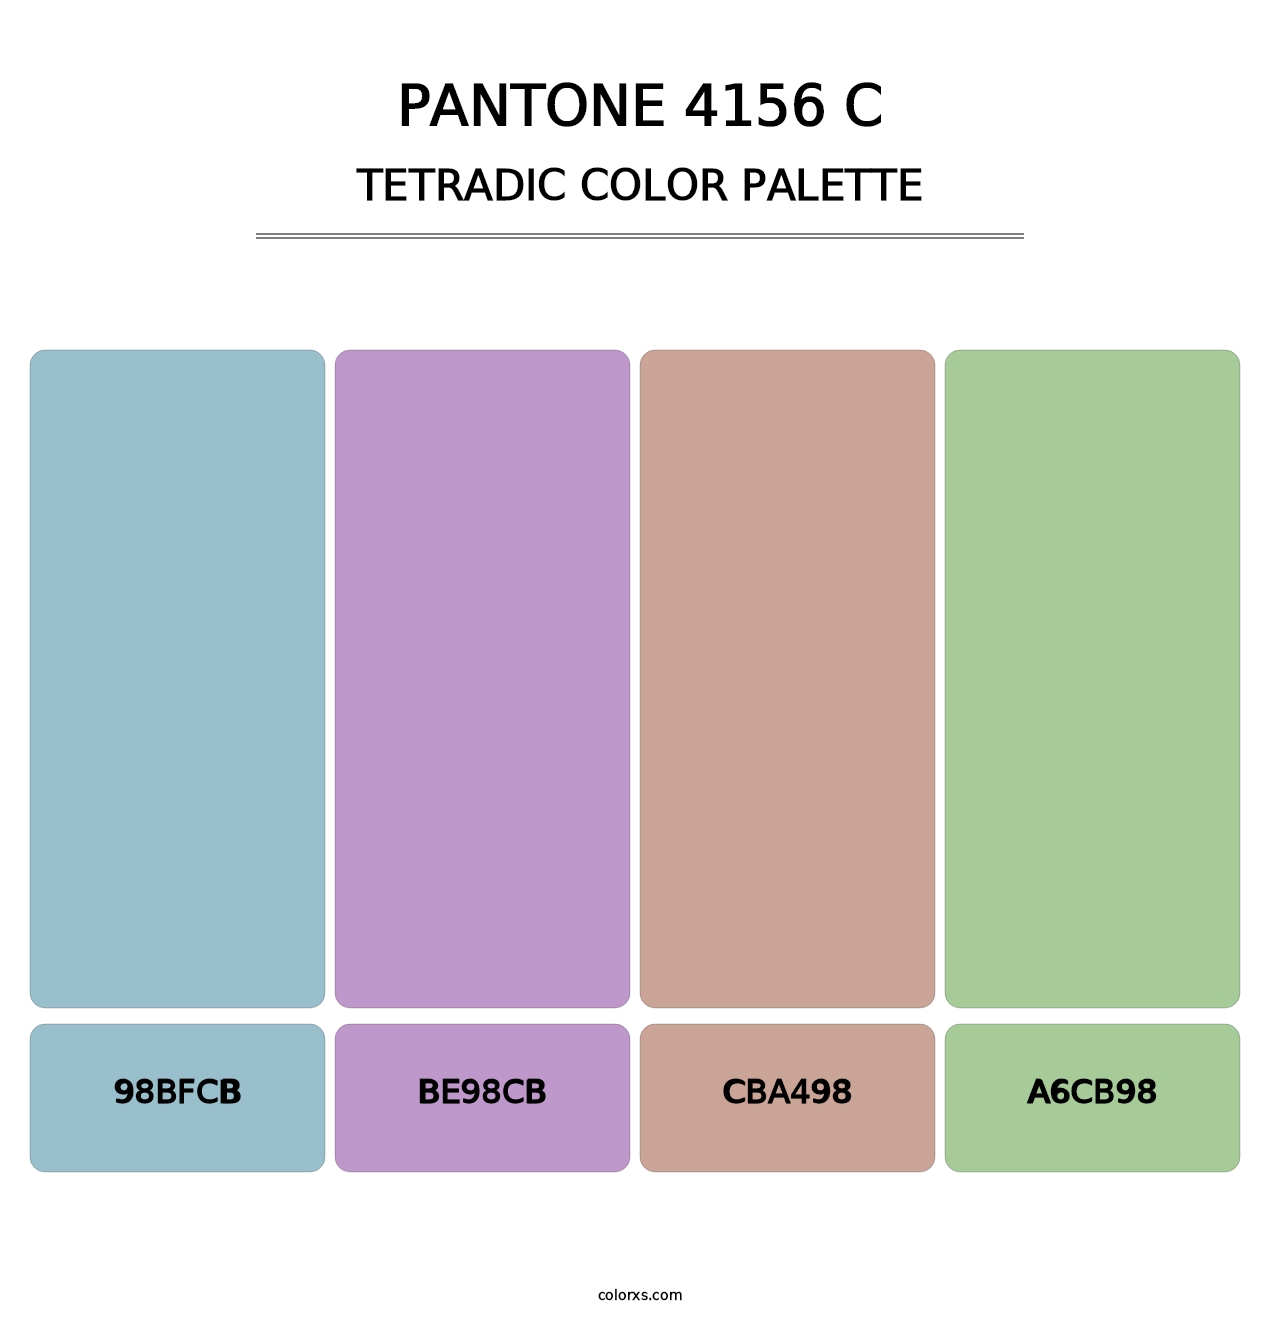 PANTONE 4156 C - Tetradic Color Palette